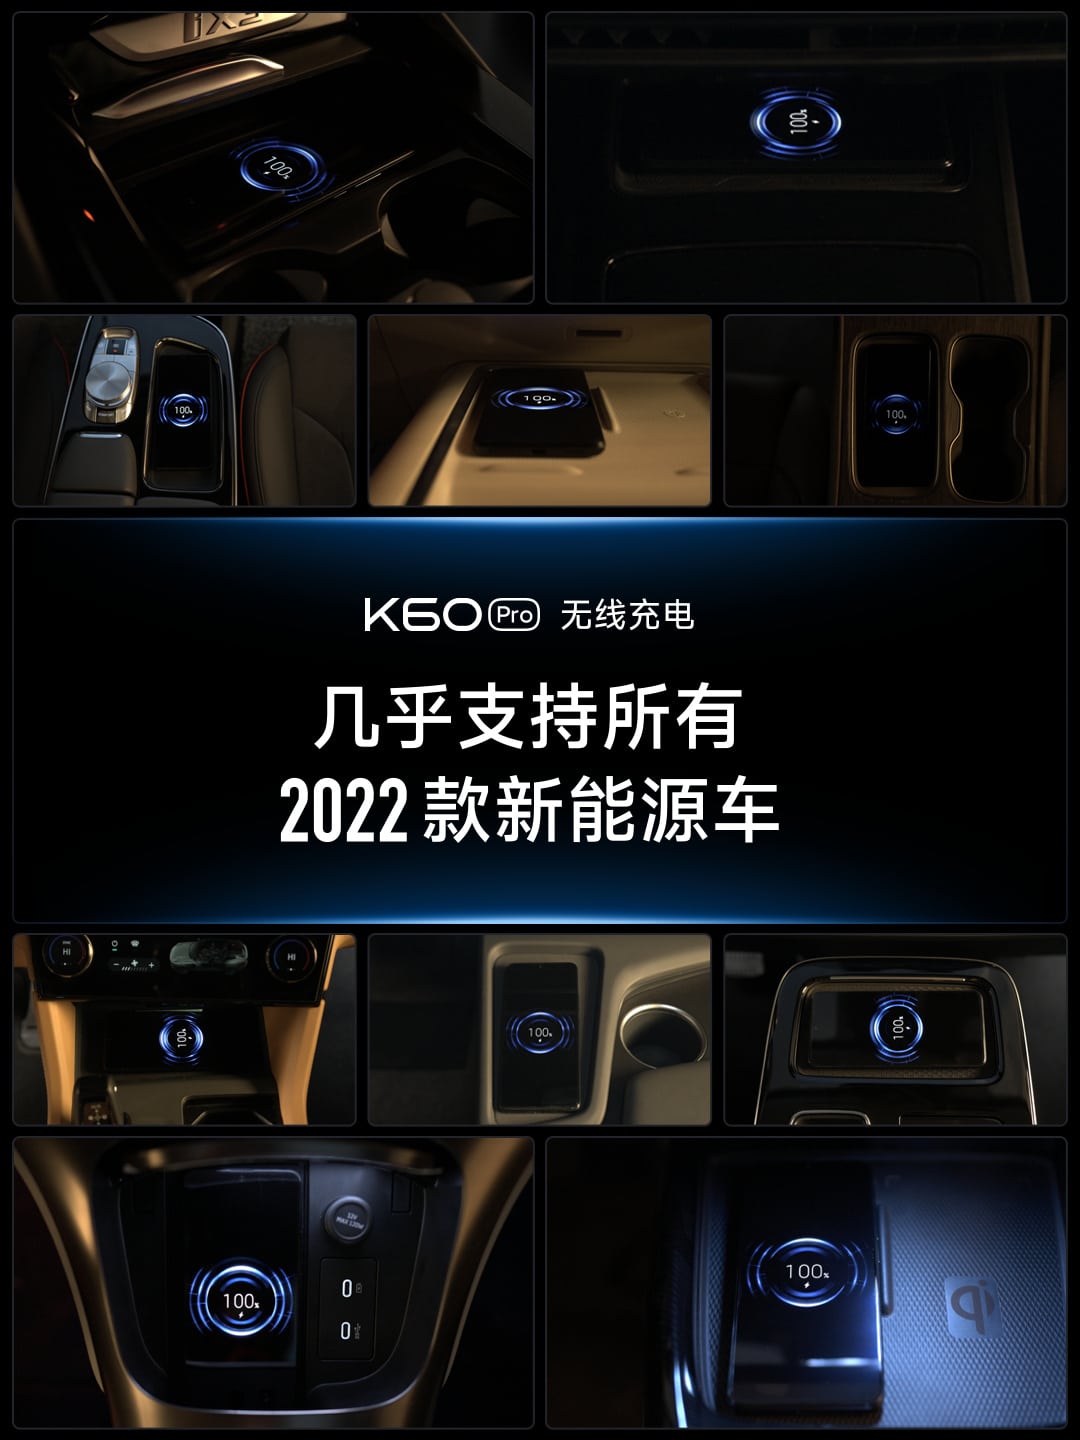 Redmi K60 Pro charging